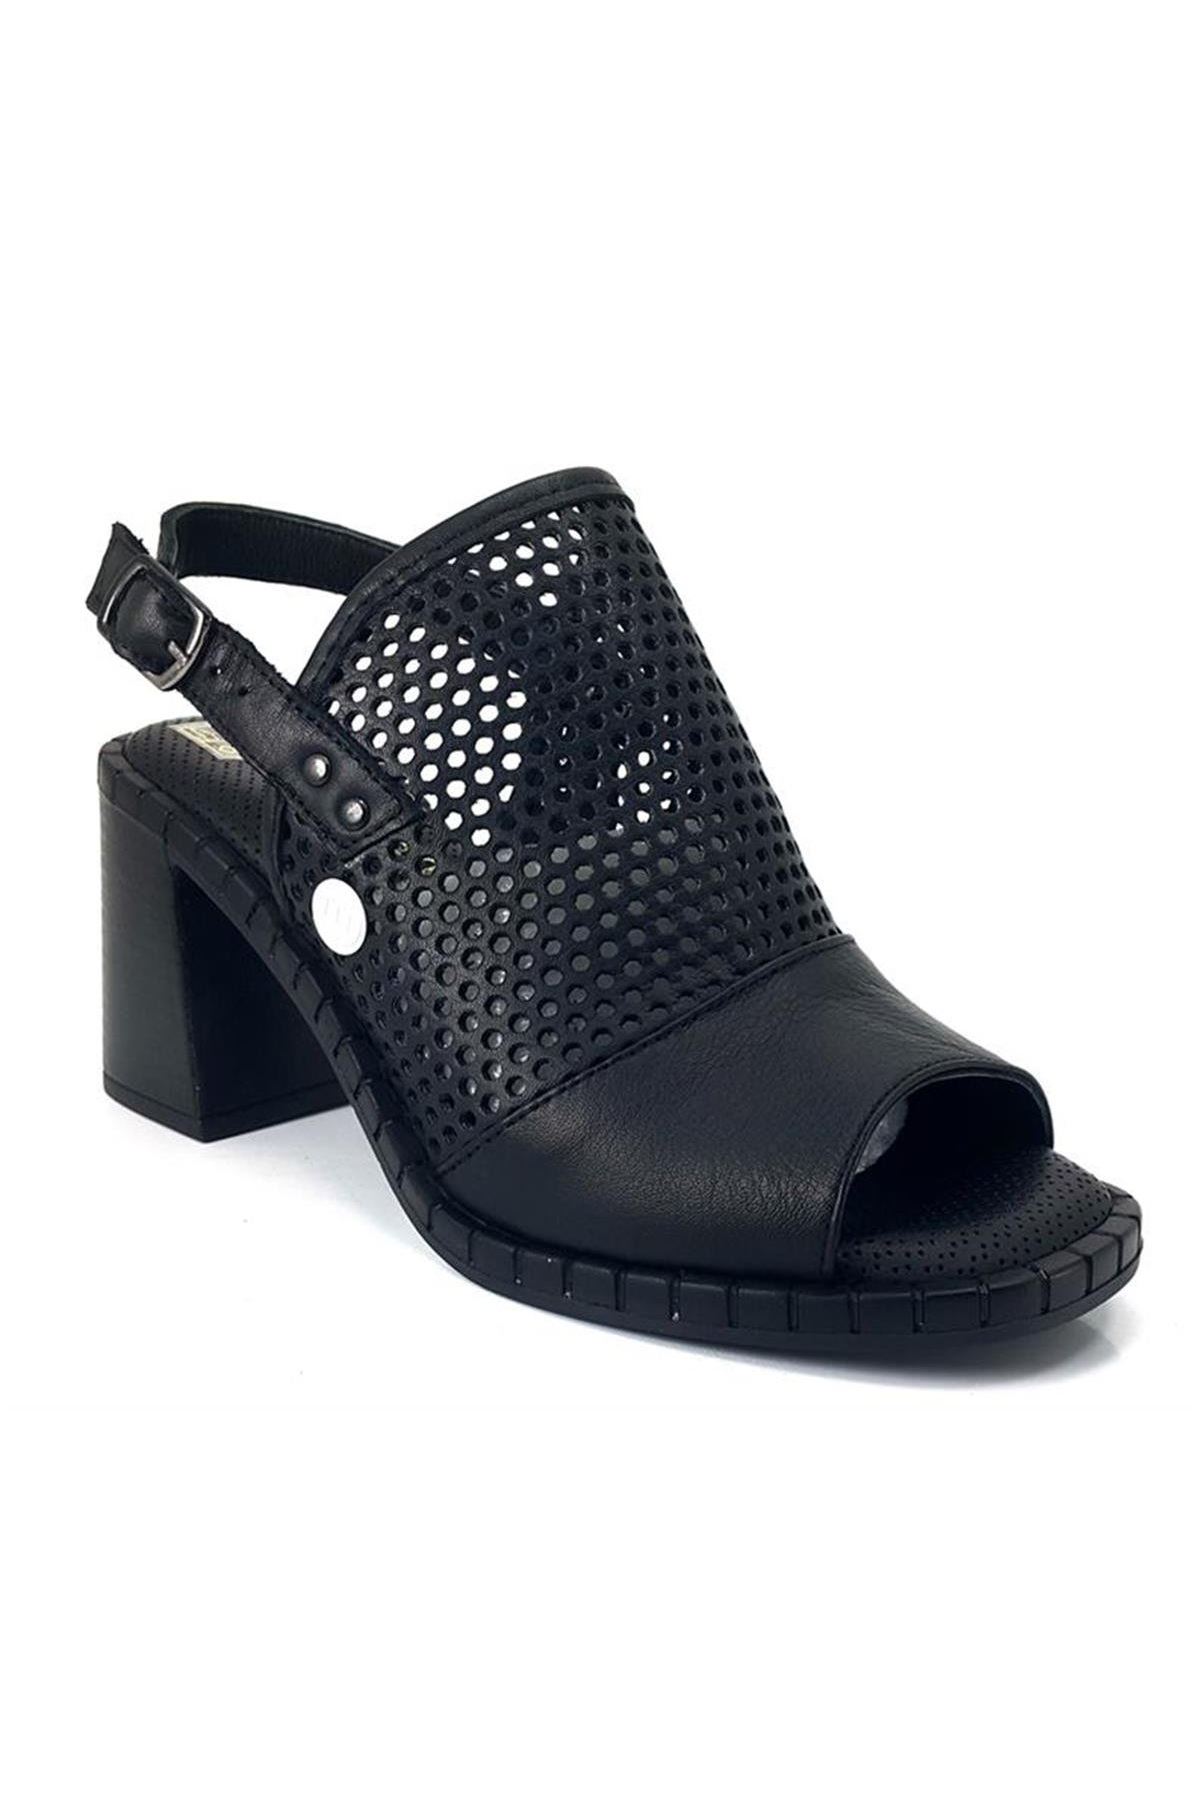 Mammamia D23YS-1425 Hakiki Deri Kadın Sandalet - Siyah